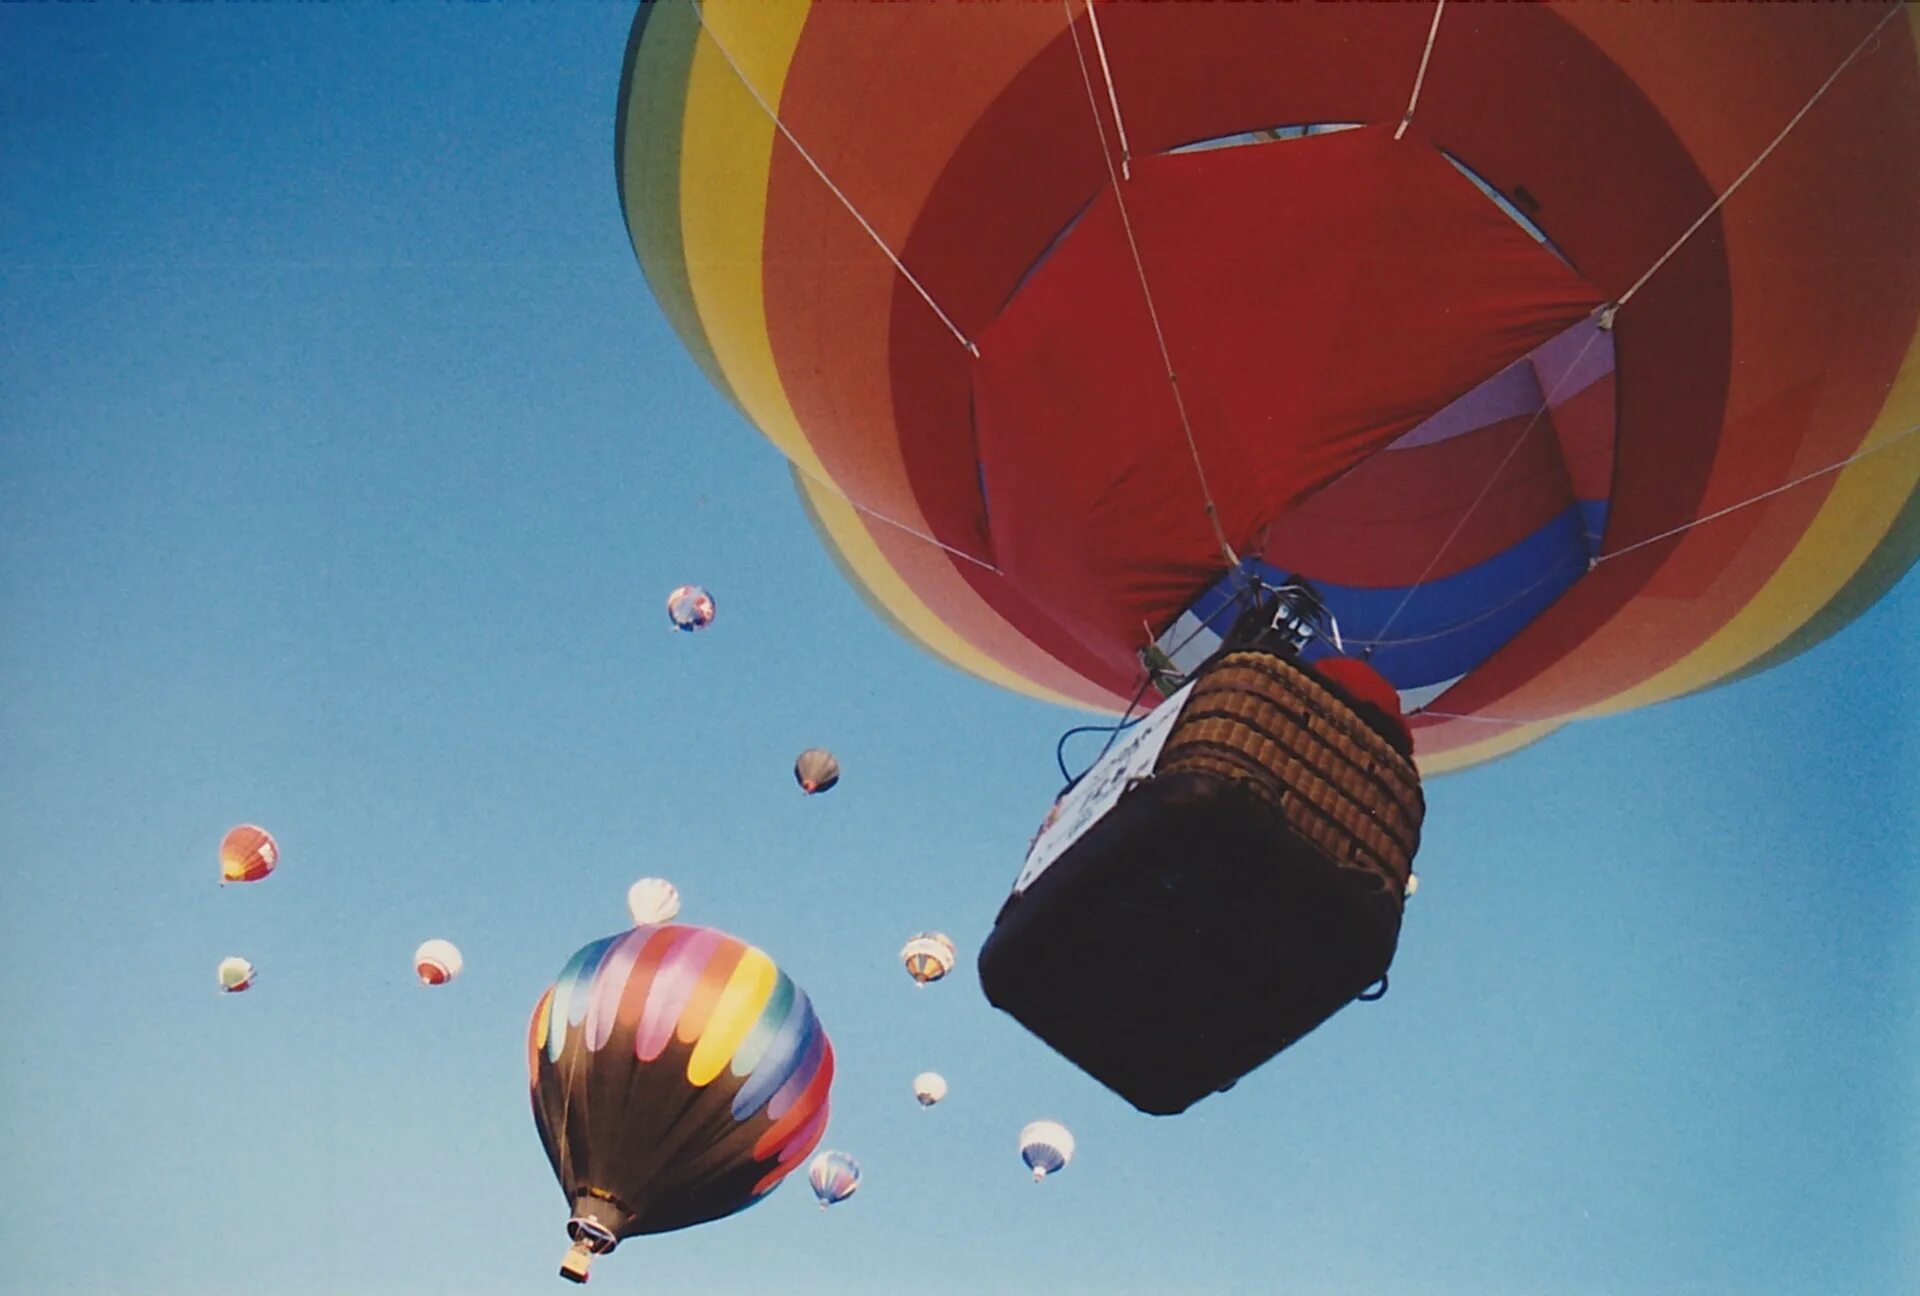 Самолет на воздушном шаре. Воздушный шар. Полет на воздушных шариках. Воздушный шар в небе. Воздушный шар с людьми.